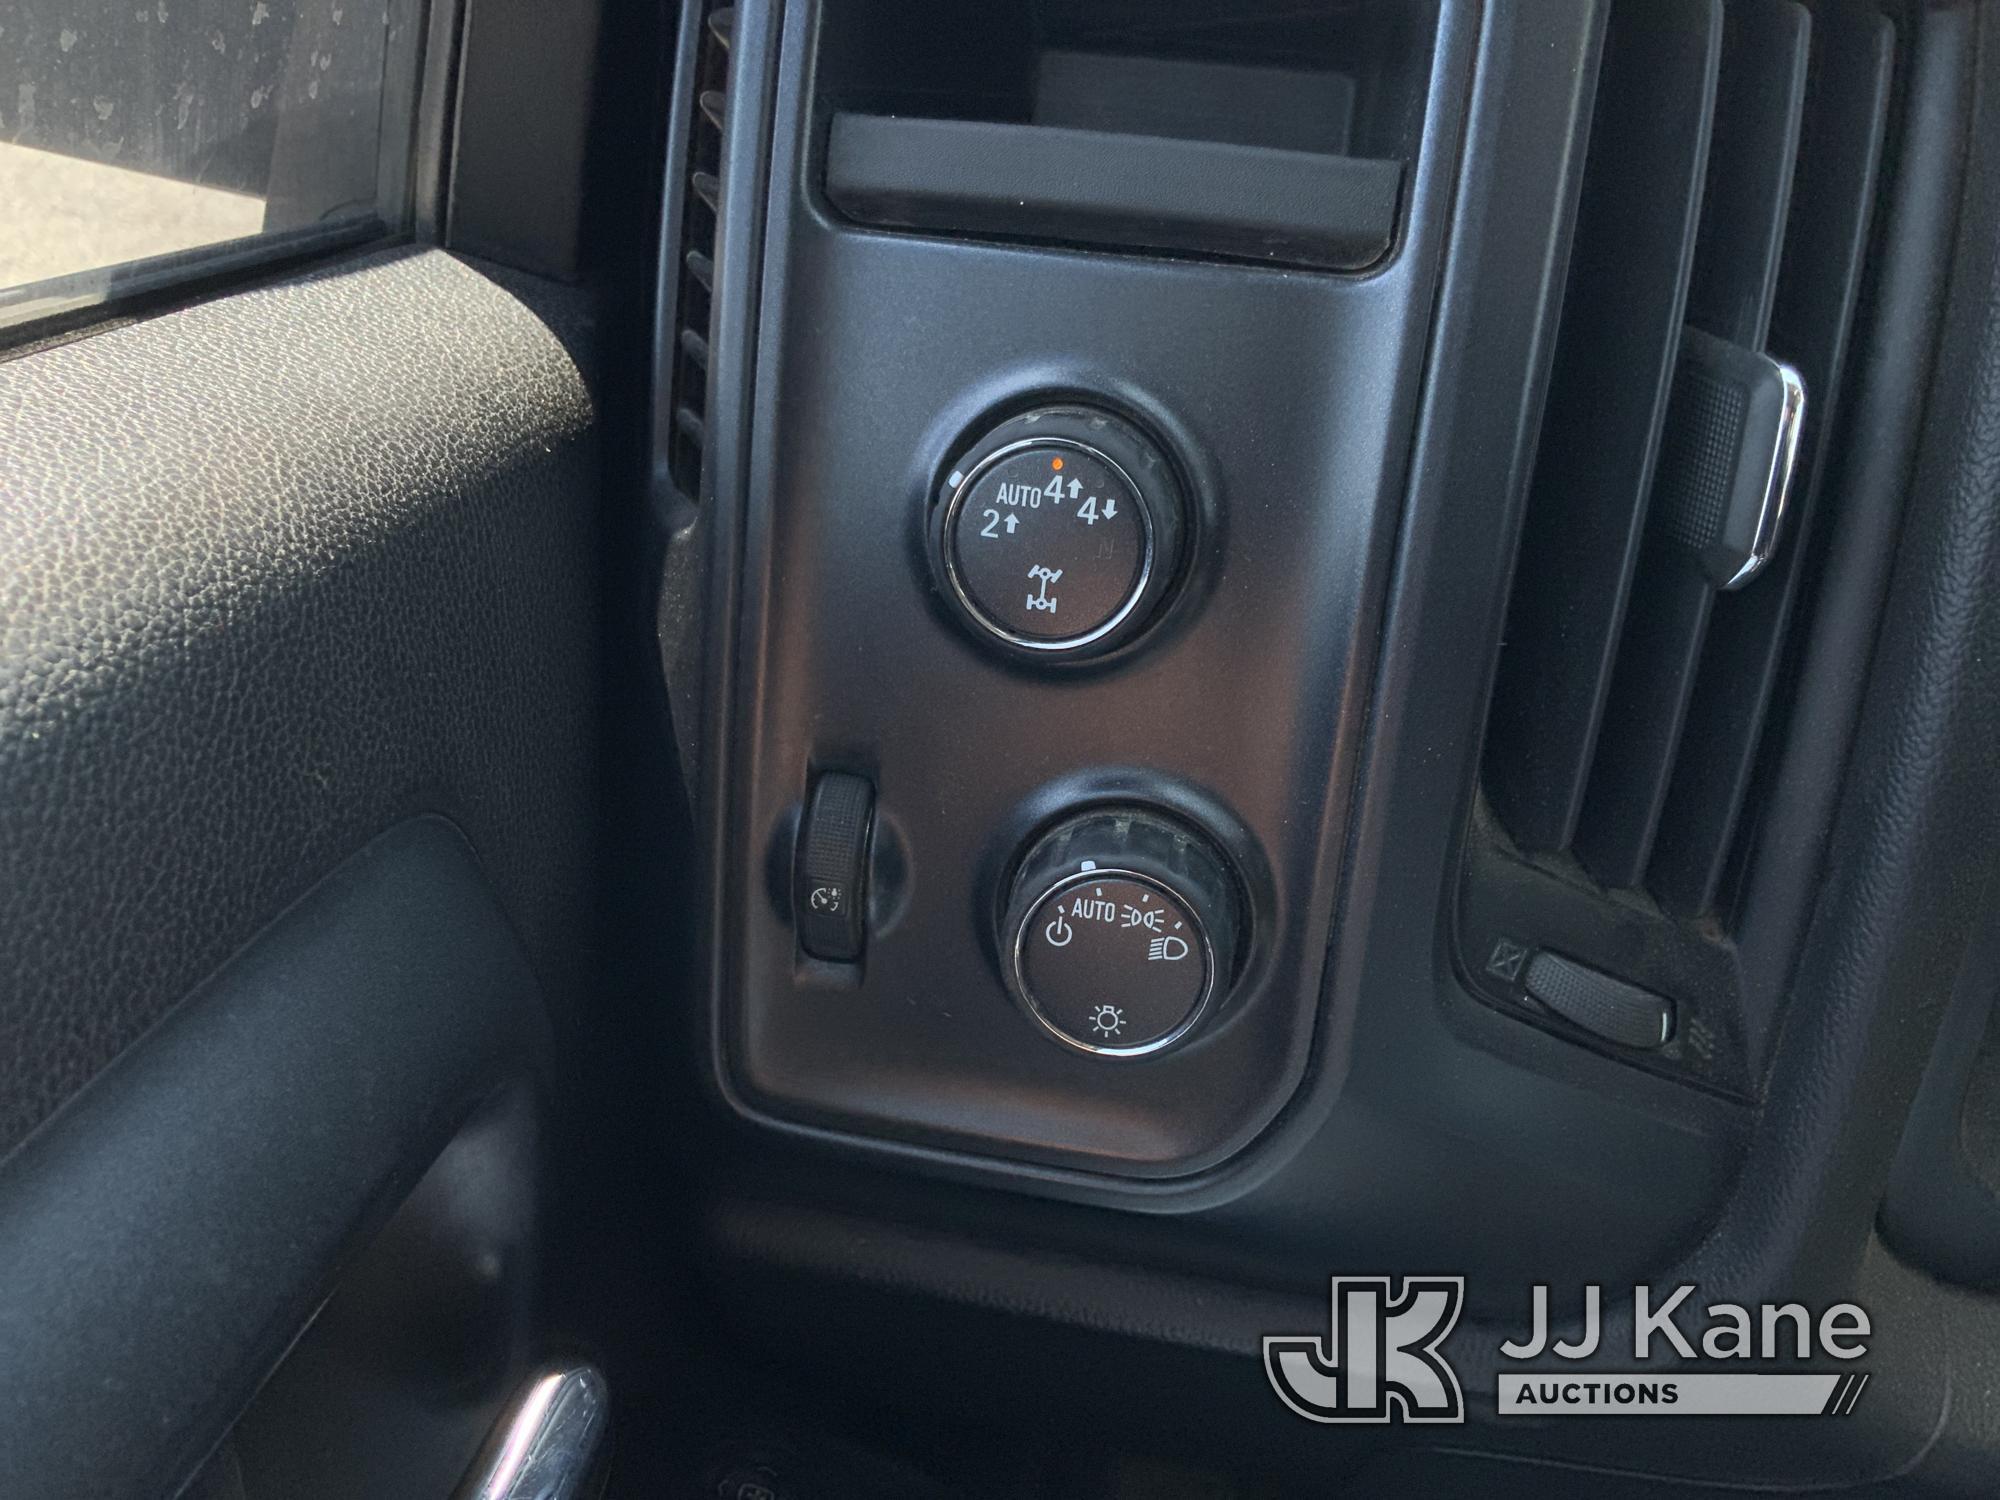 (Fort Wayne, IN) 2018 Chevrolet Silverado K1500 4X4 Extended-Cab Pickup Truck Not Running, Condition